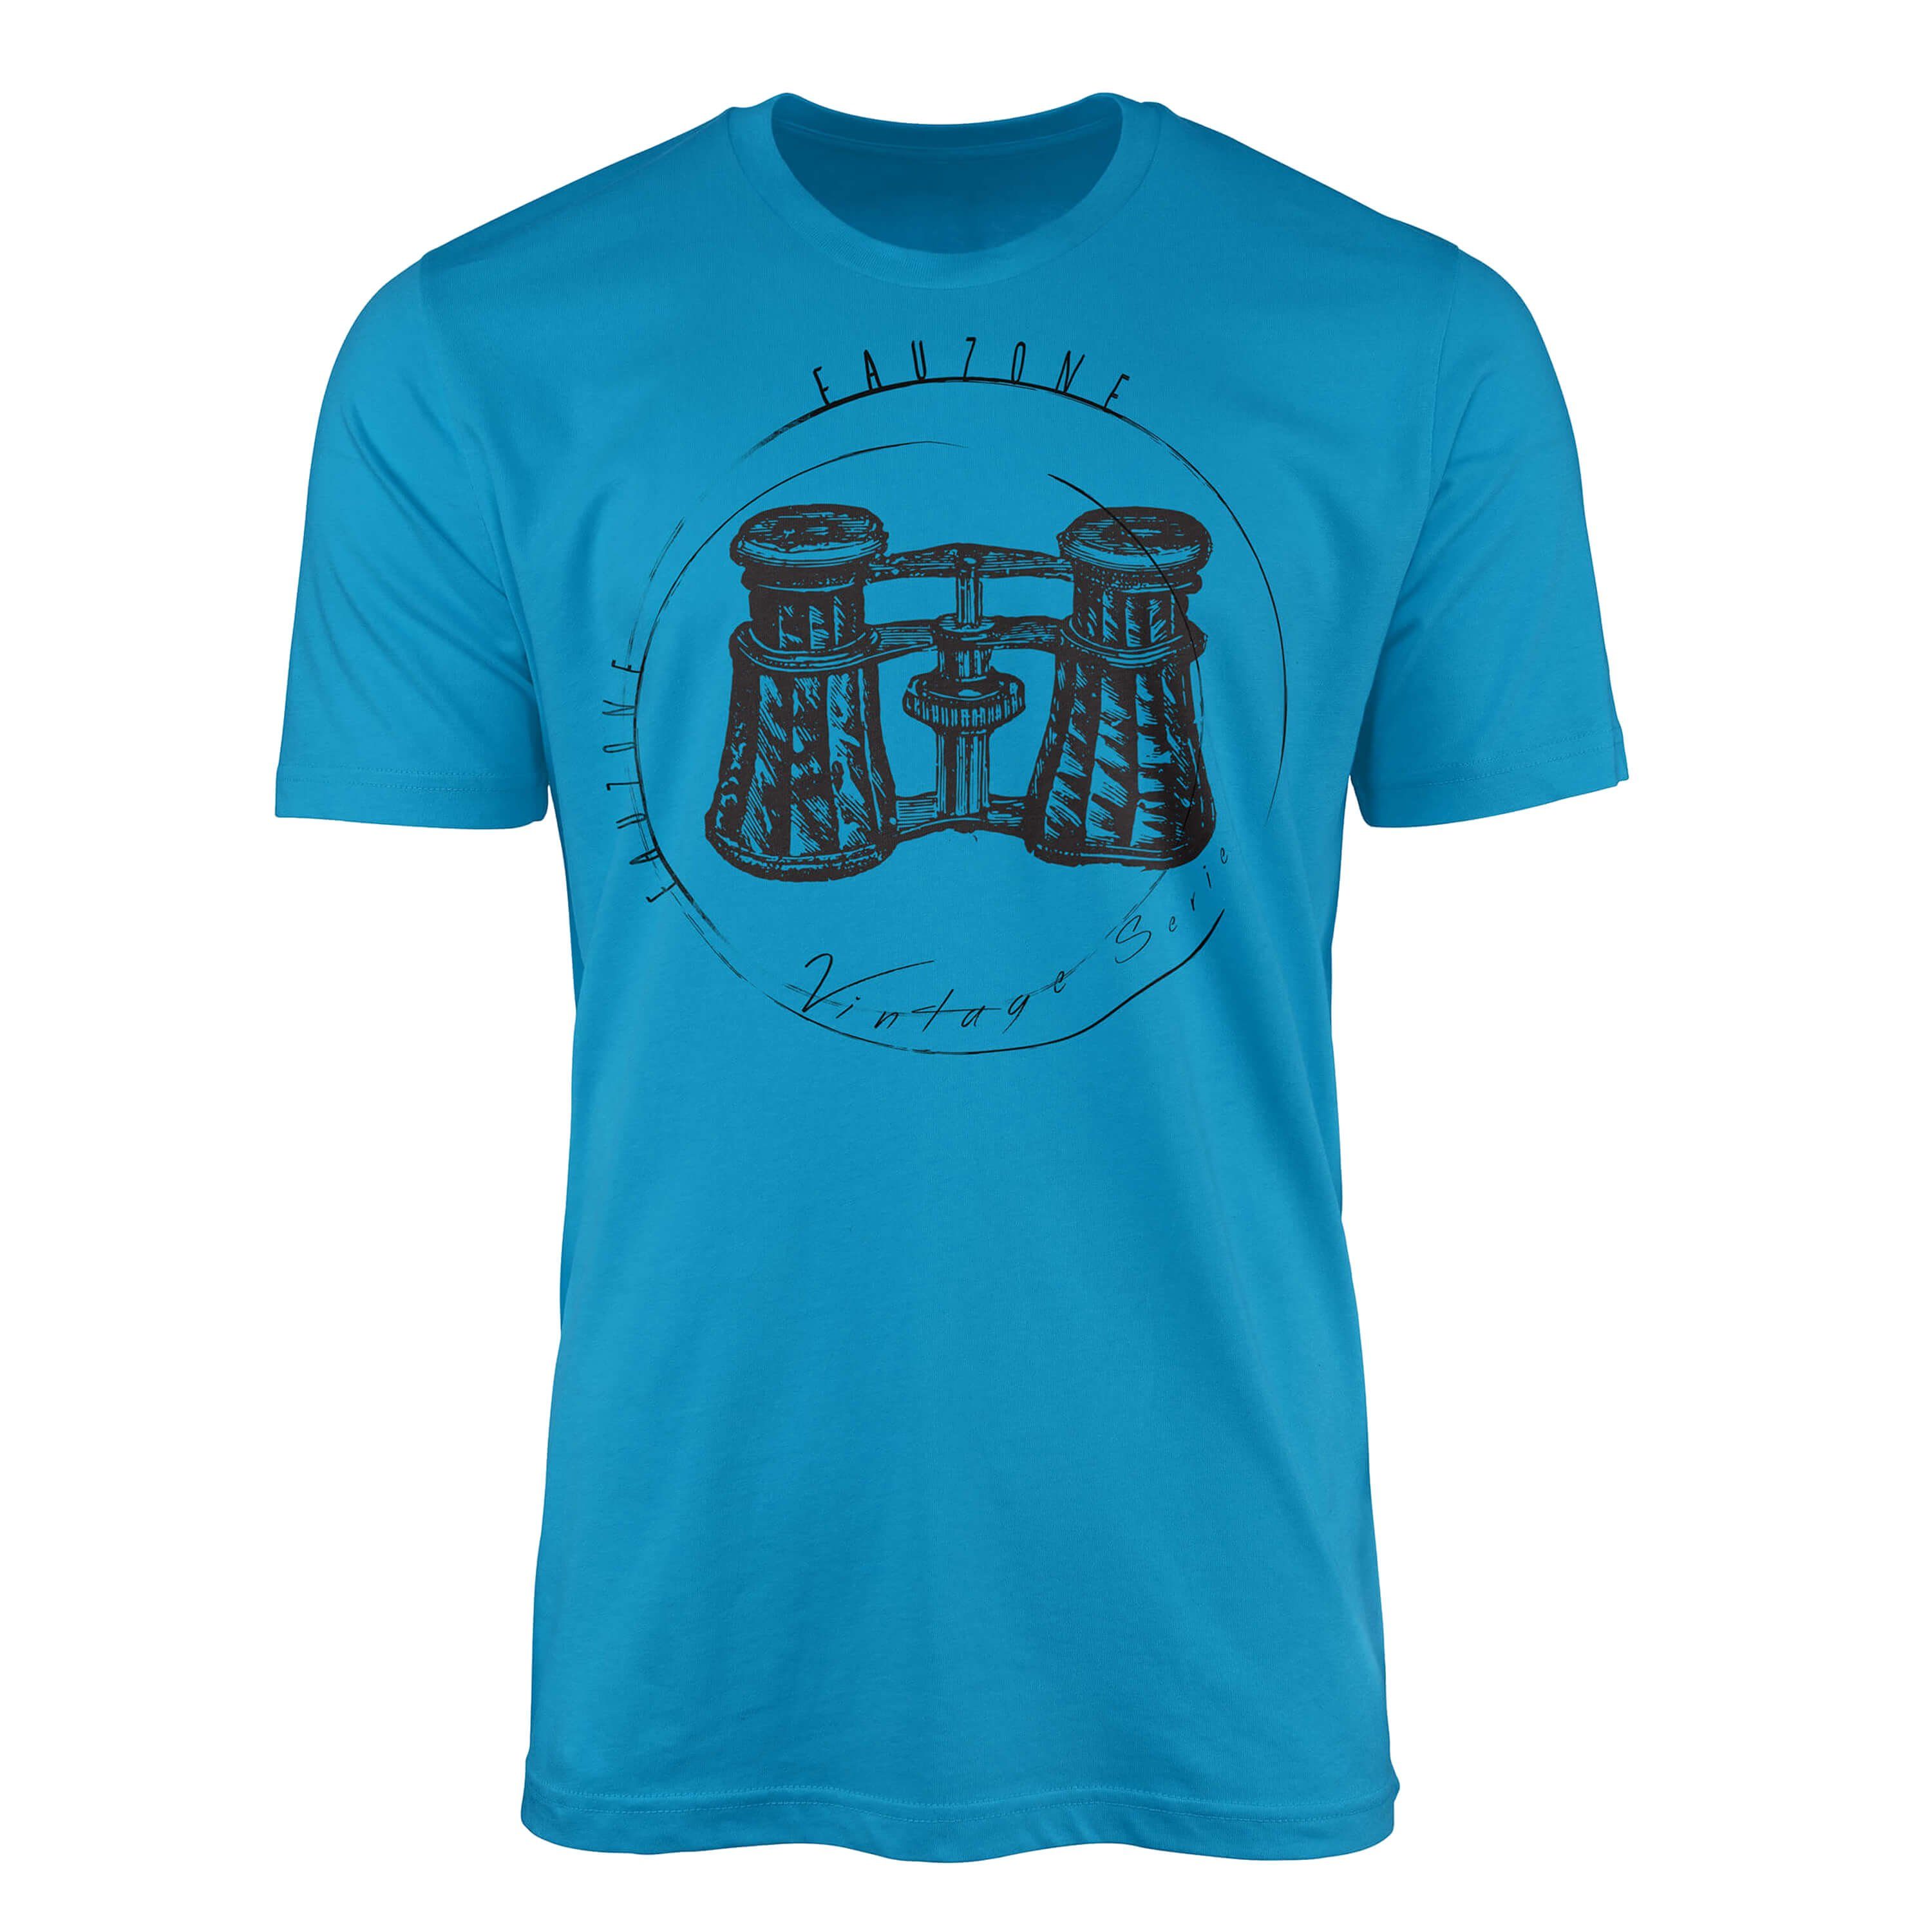 preisoptimierung Sinus Art T-Shirt Vintage Herren T-Shirt Atoll Fernglas